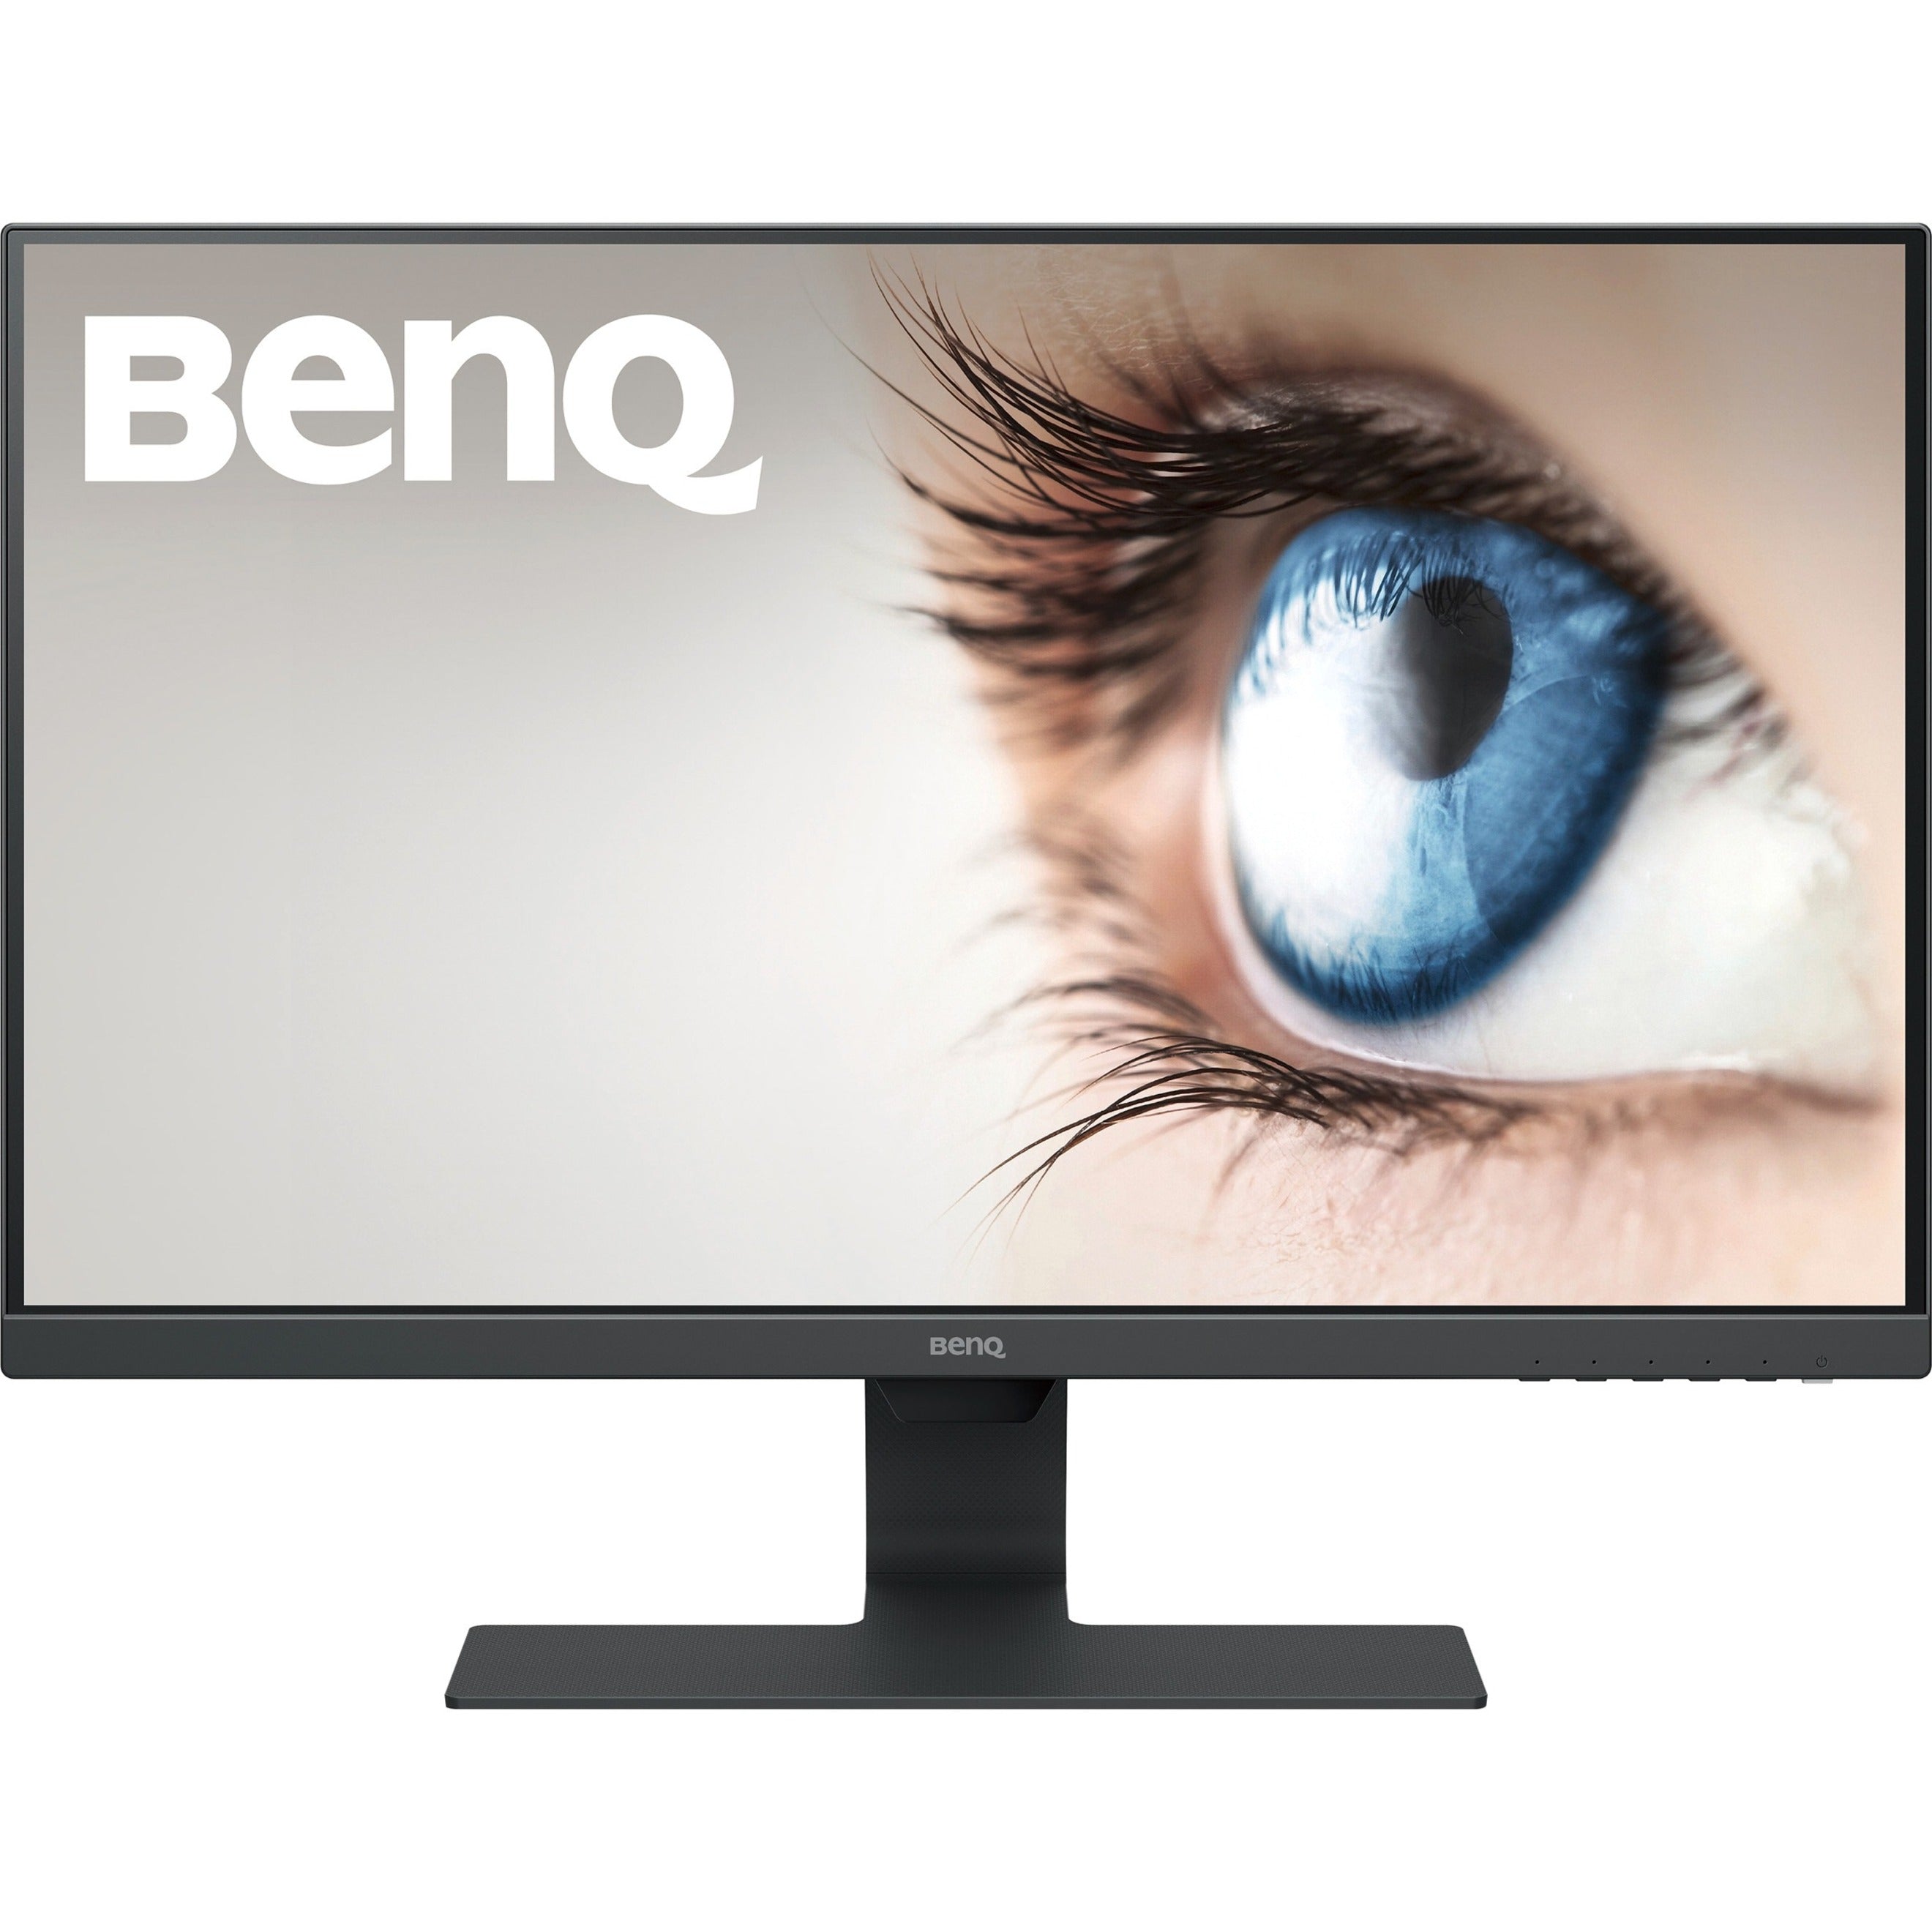 BenQ GW2780 Stylish Monitor with 27 inch 1080p Eye-care Technology, Full HD LCD Monitor - 16:9 - Black